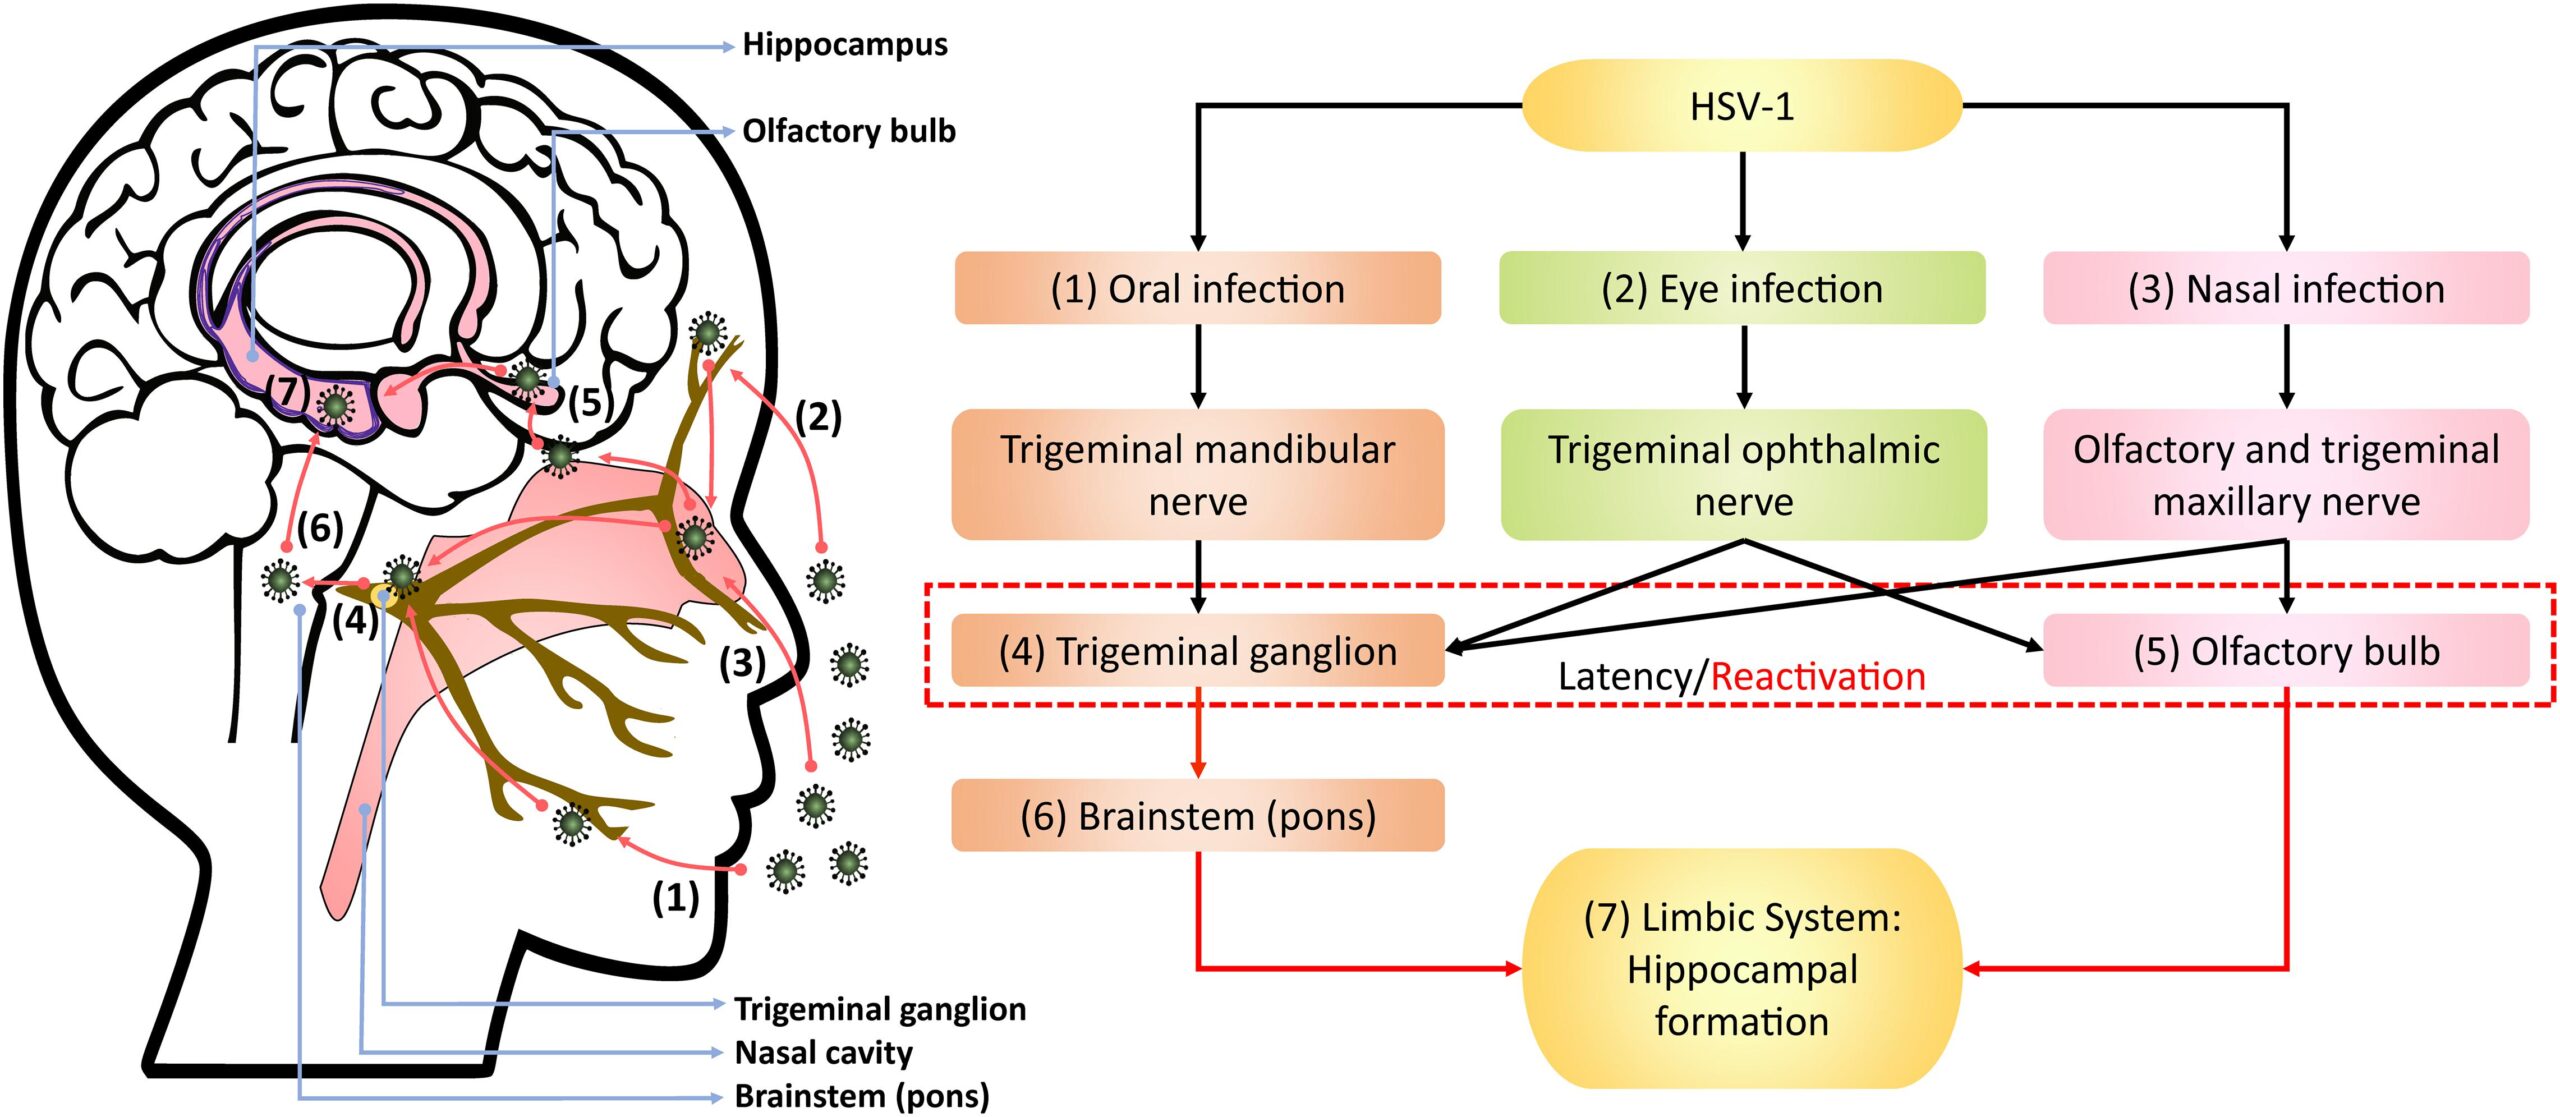 Clinical manifestations of Herpes simplex virus 1 (HSV-1)